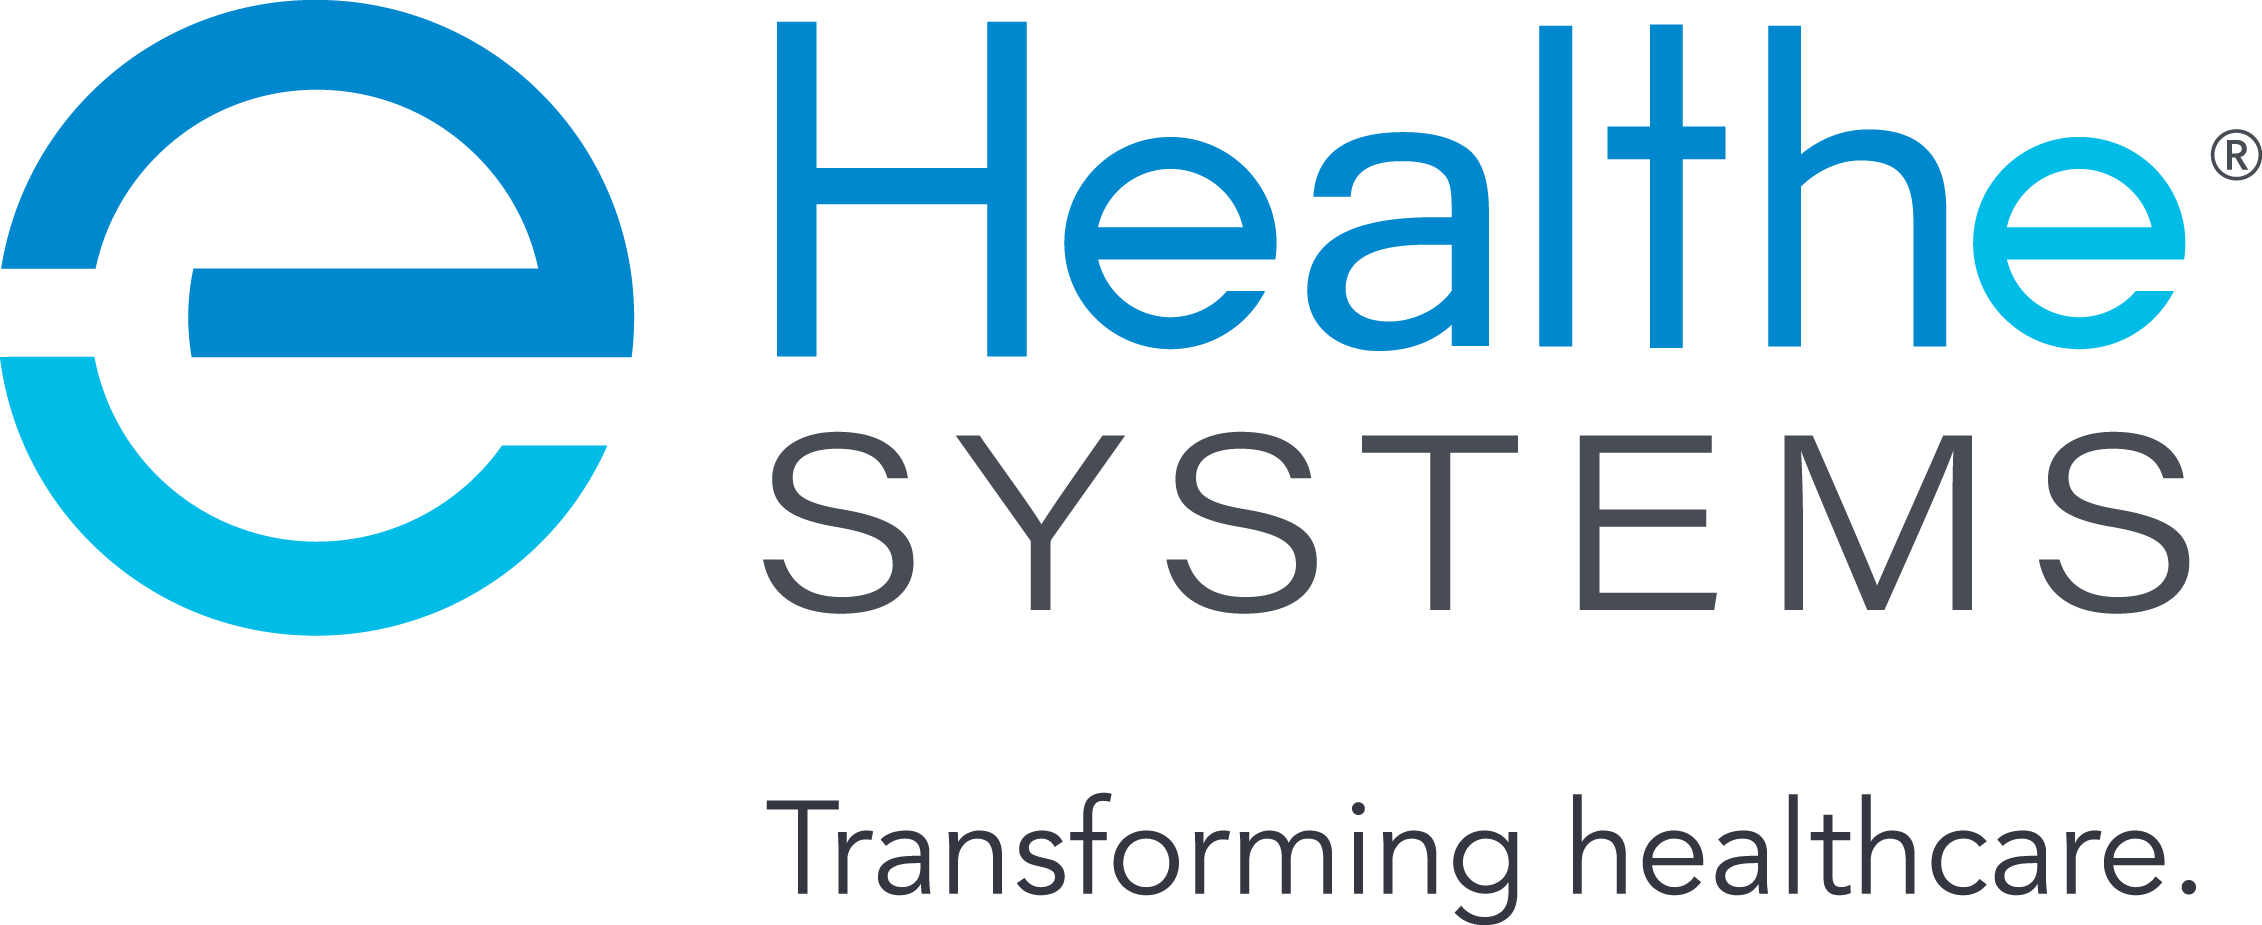 Healthesystems logo